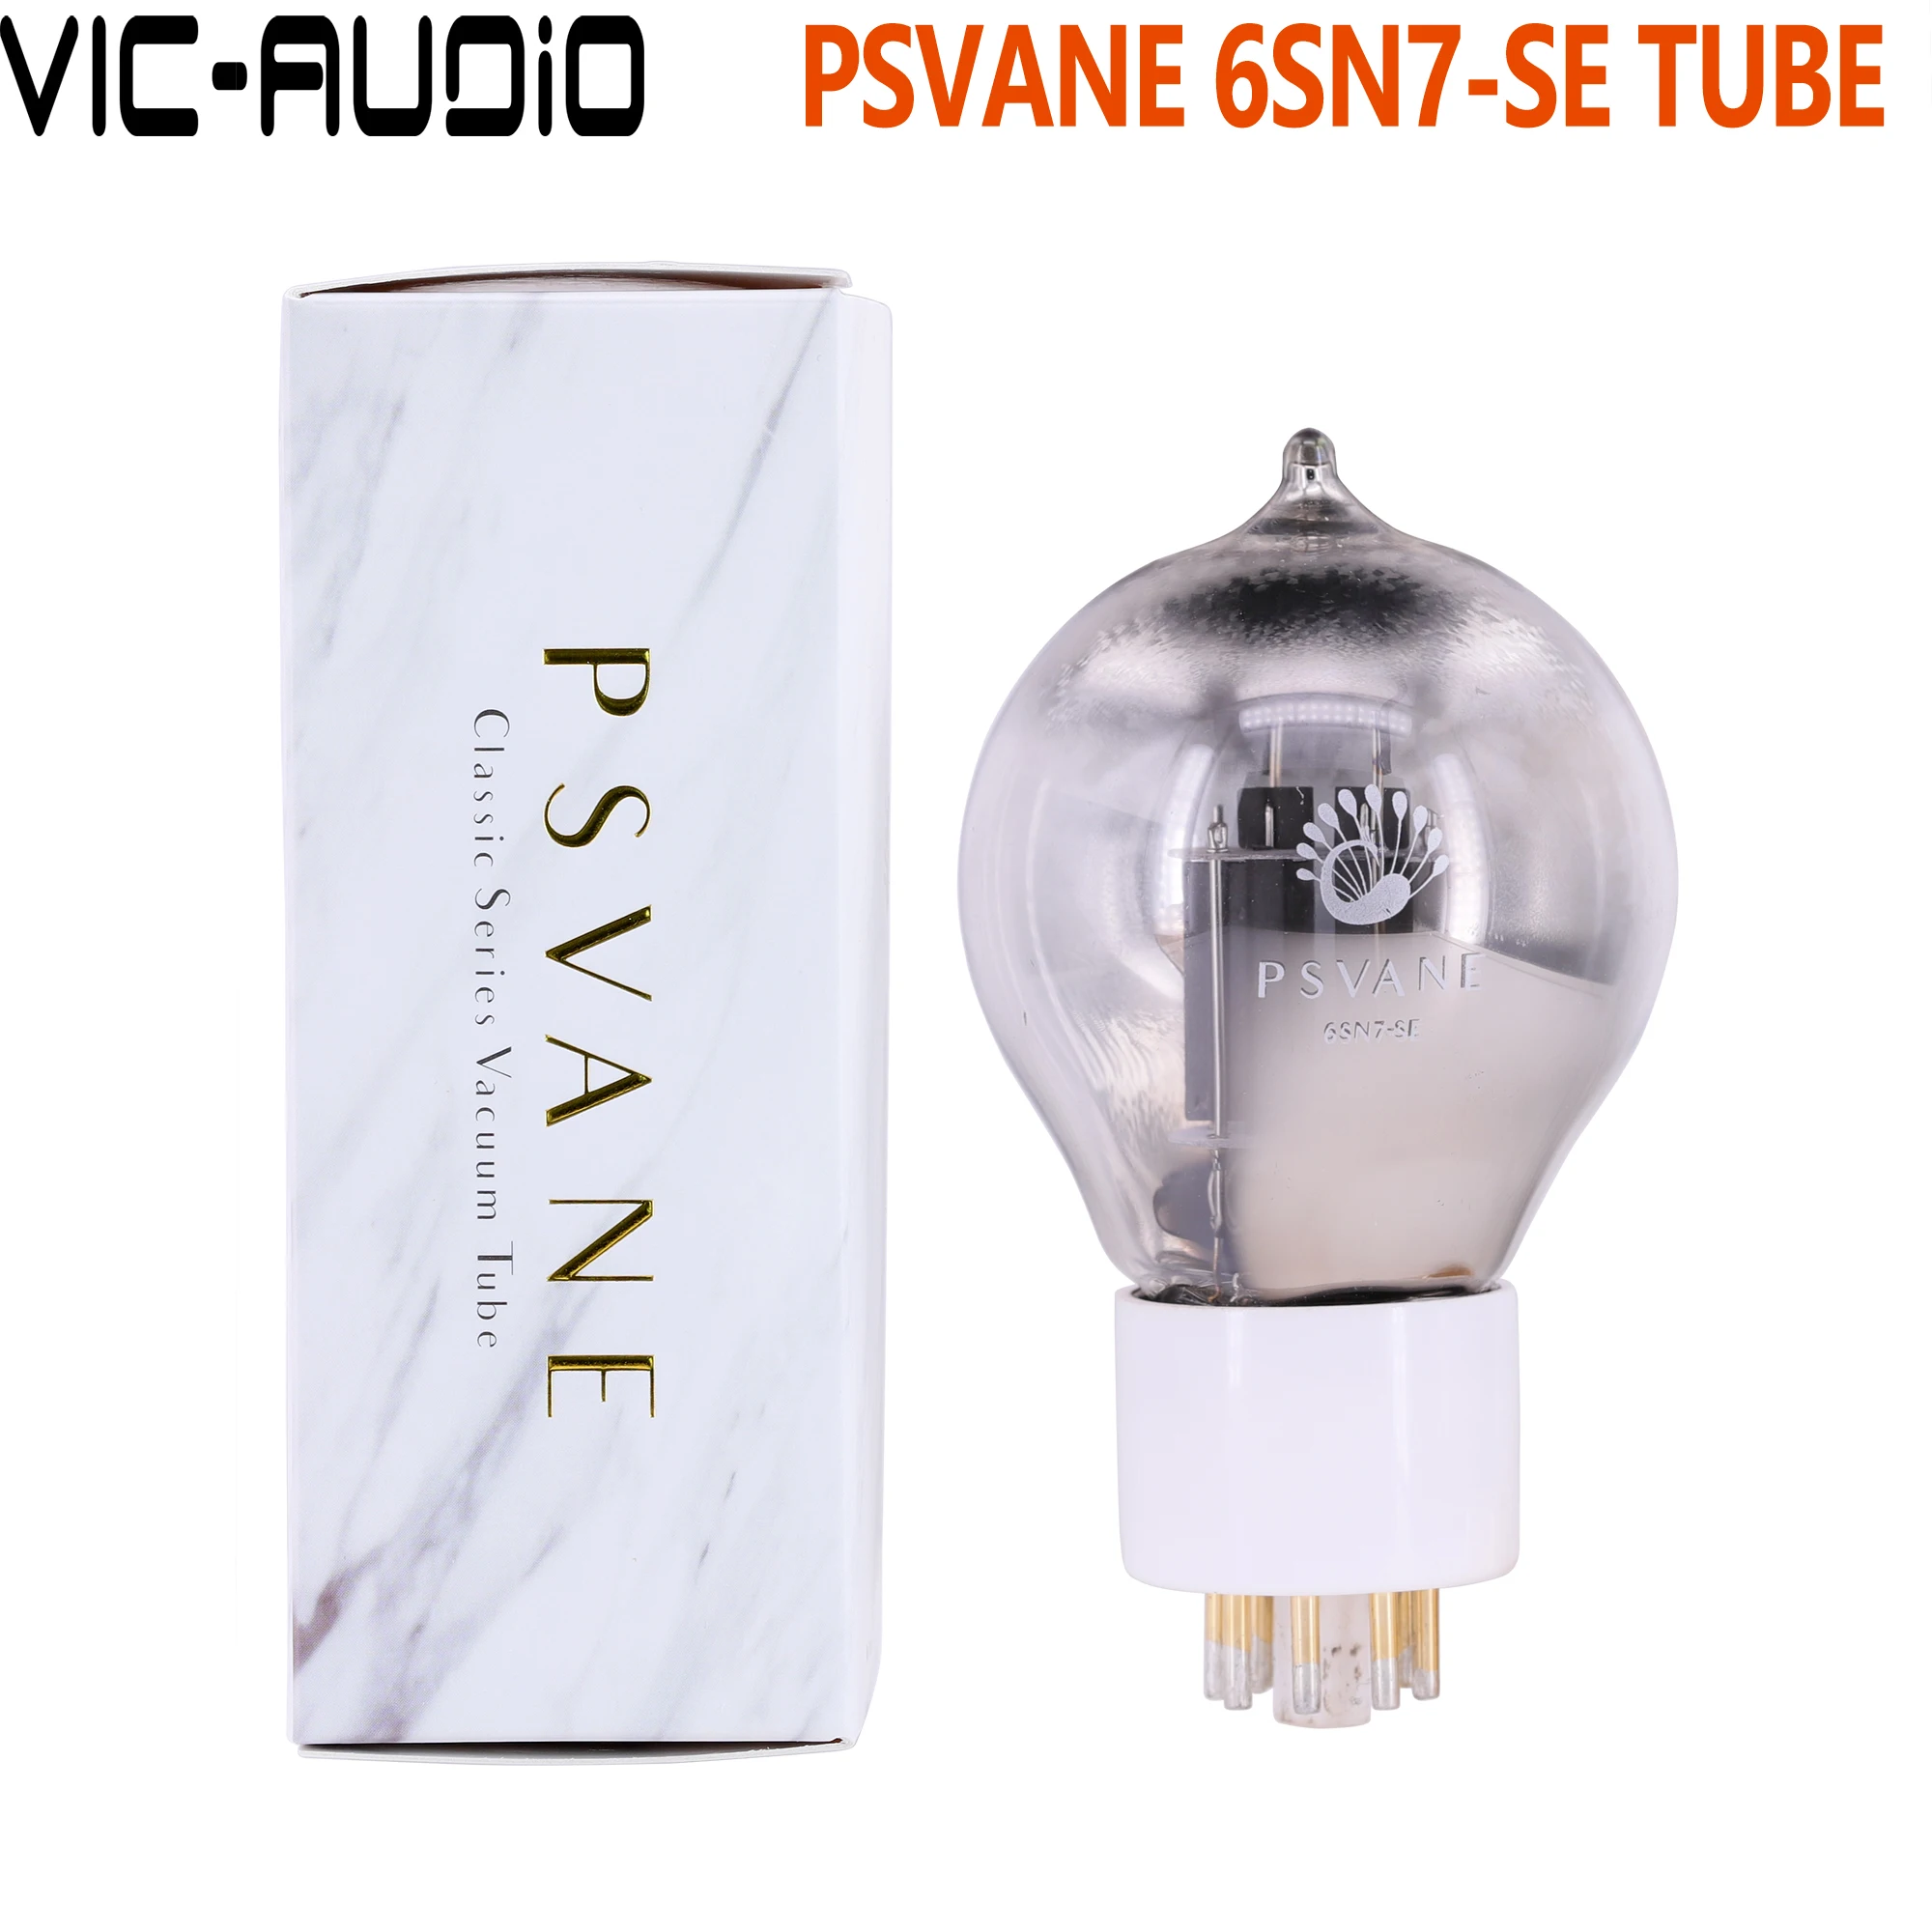 1PC Psvane 6SN7-SE Vacuum Tube Replace 6N8P 6SN7GT 6SN7-BE 6H8C CV181 6SN7 Tube For Vintage Hifi Audio Tube Amplifier DIY best integrated amplifier